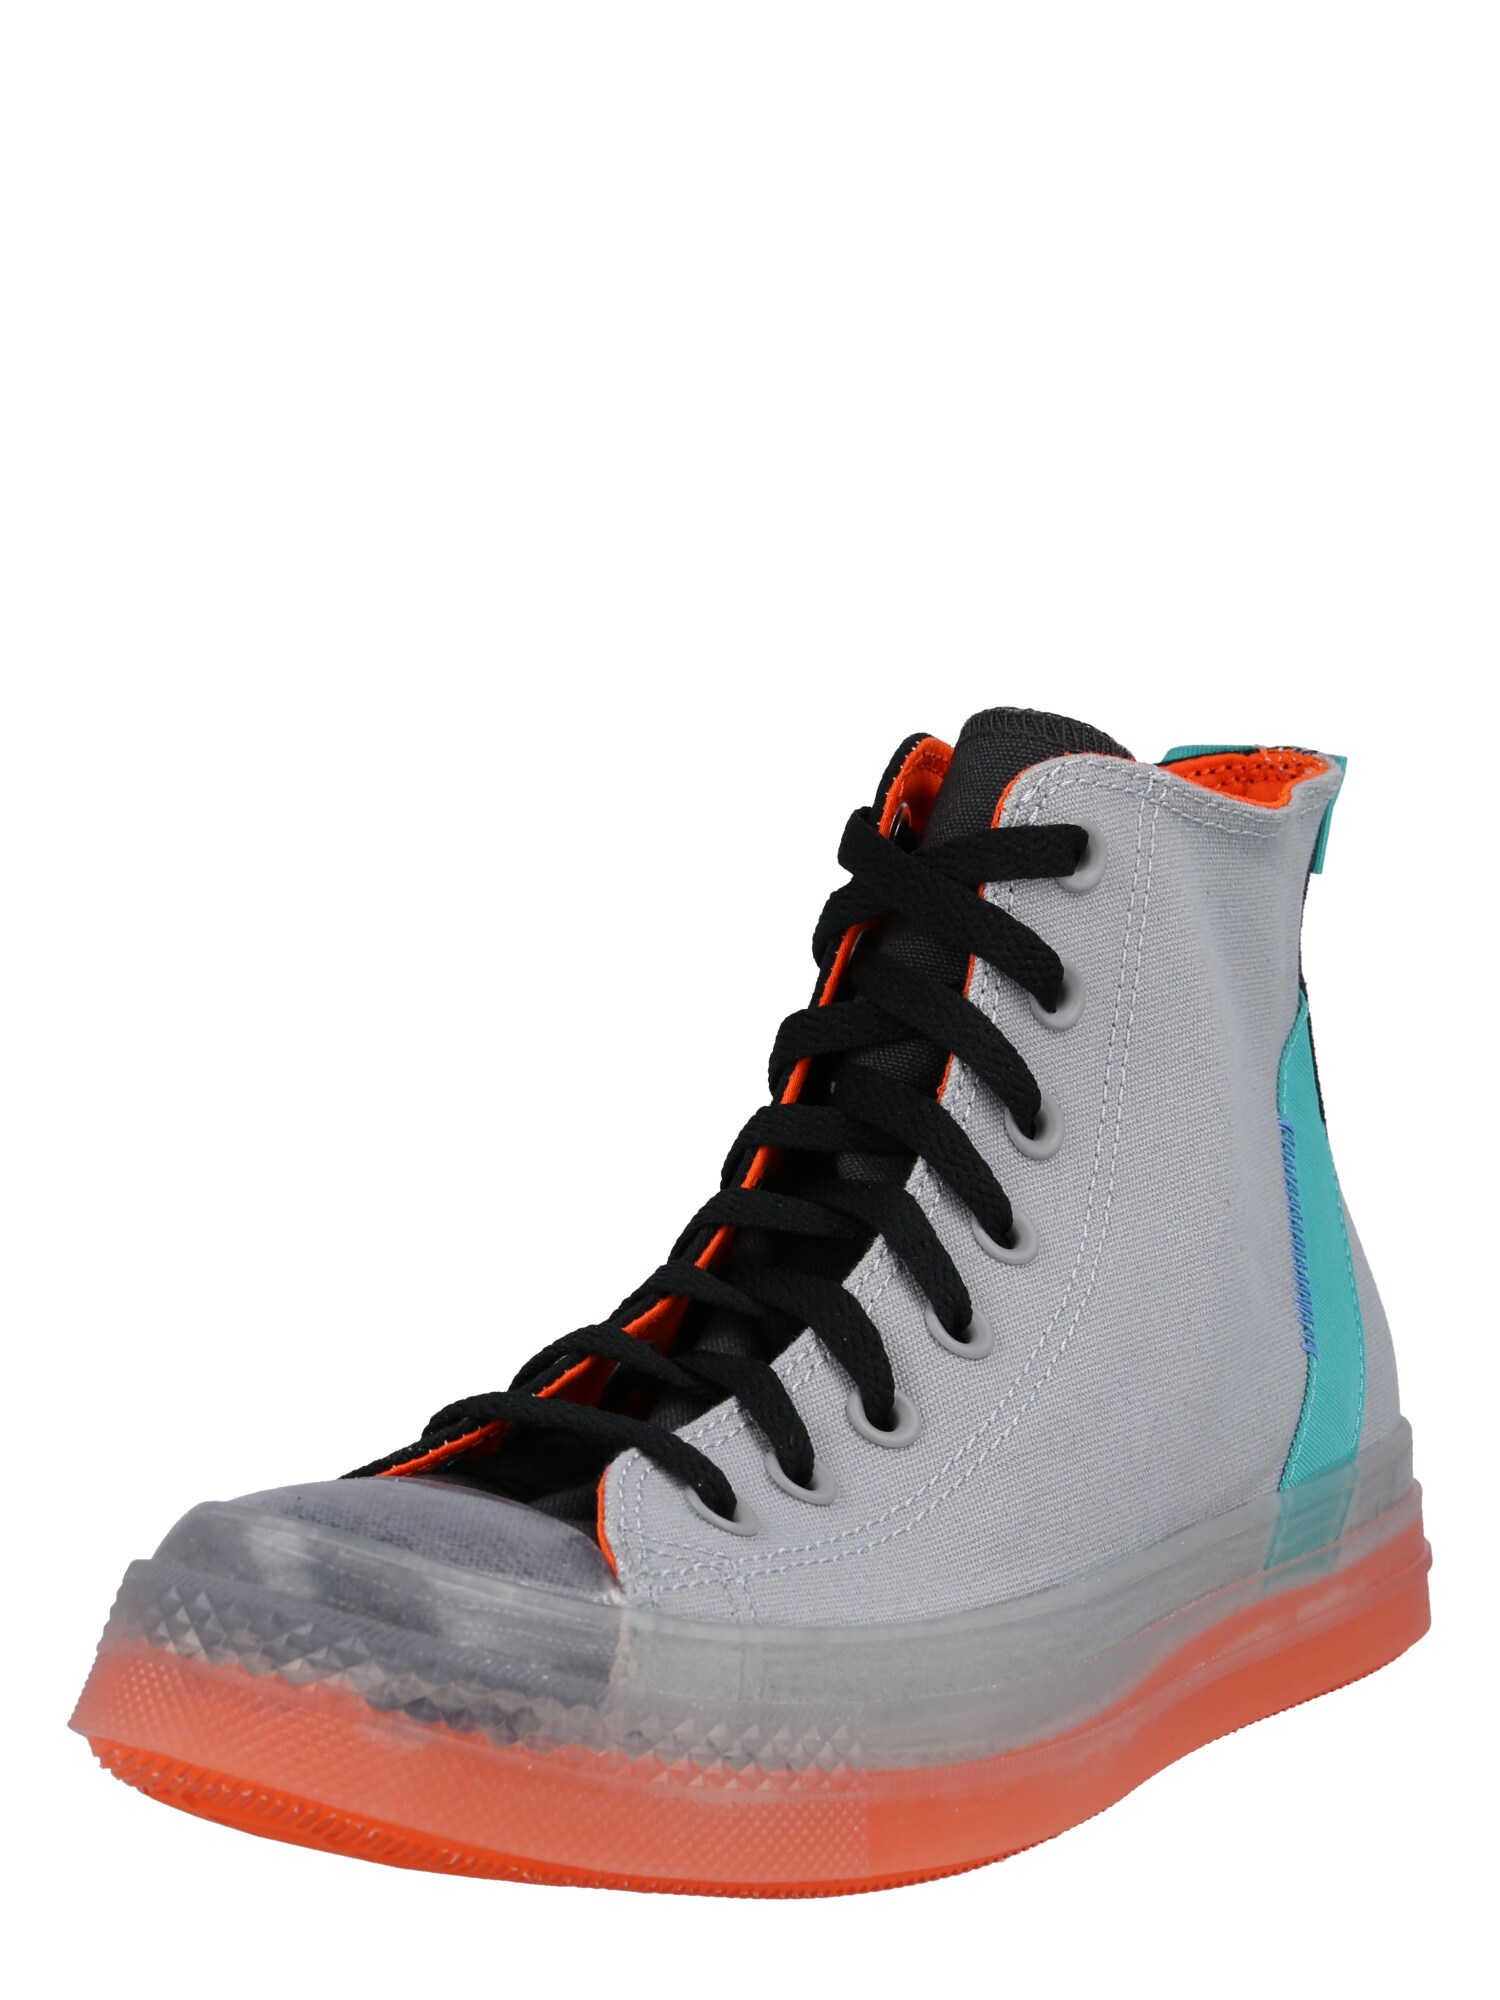 Converse CONVERSE Sneaker 'CHUCK TAYLOR ALL STAR CX POP BRIGHT' türkis / grau / orange / schwarz